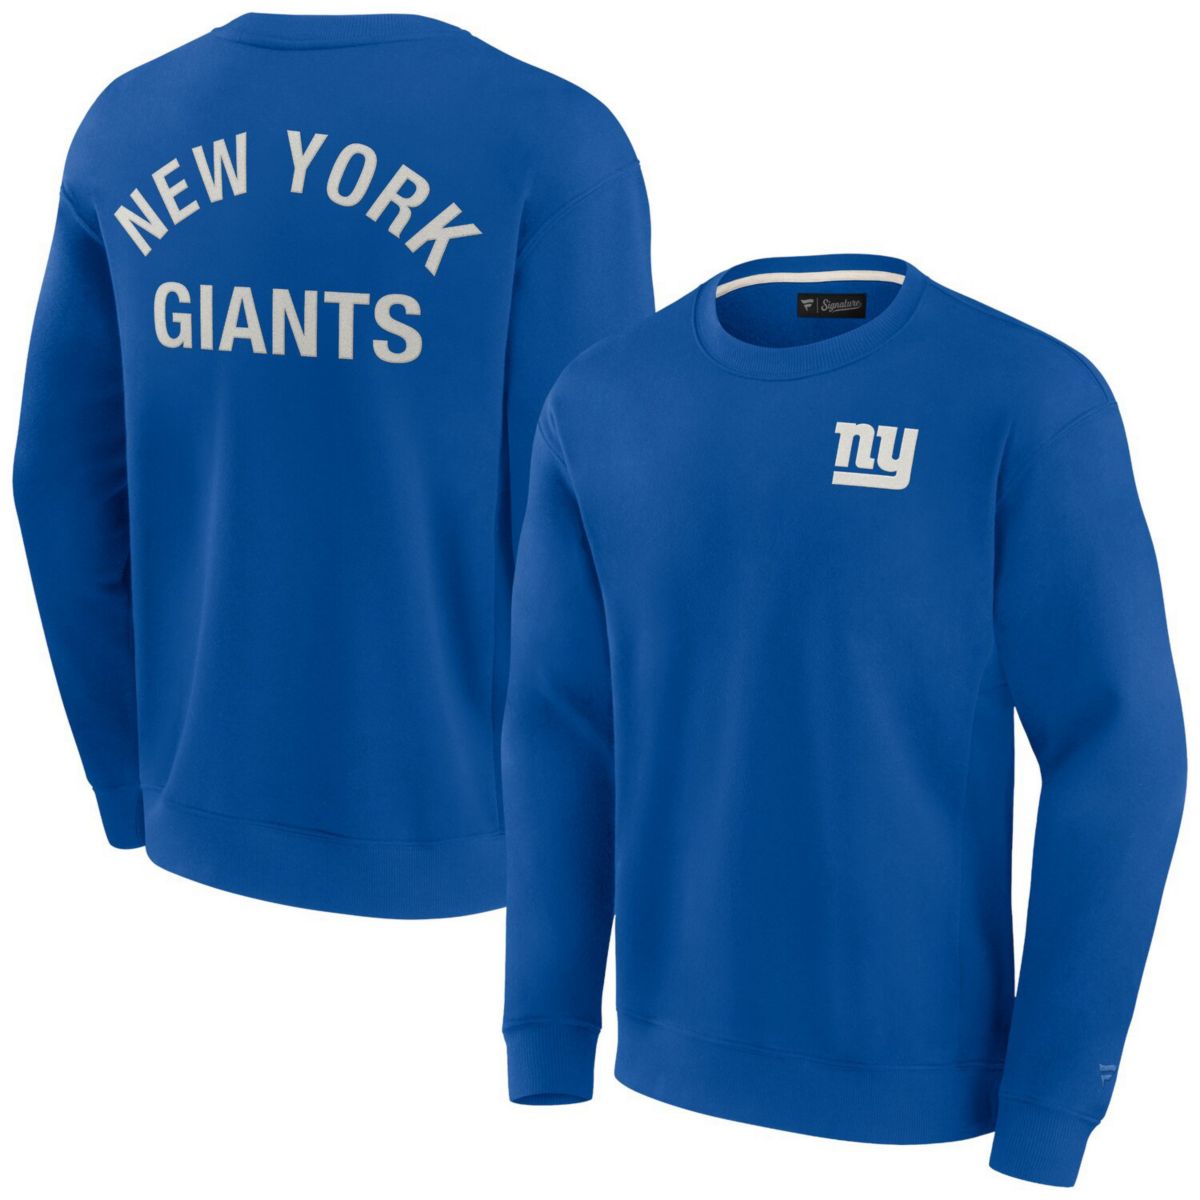 Unisex Fanatics Signature Royal New York Giants Super Soft Pullover Crew Sweatshirt Fanatics Signature